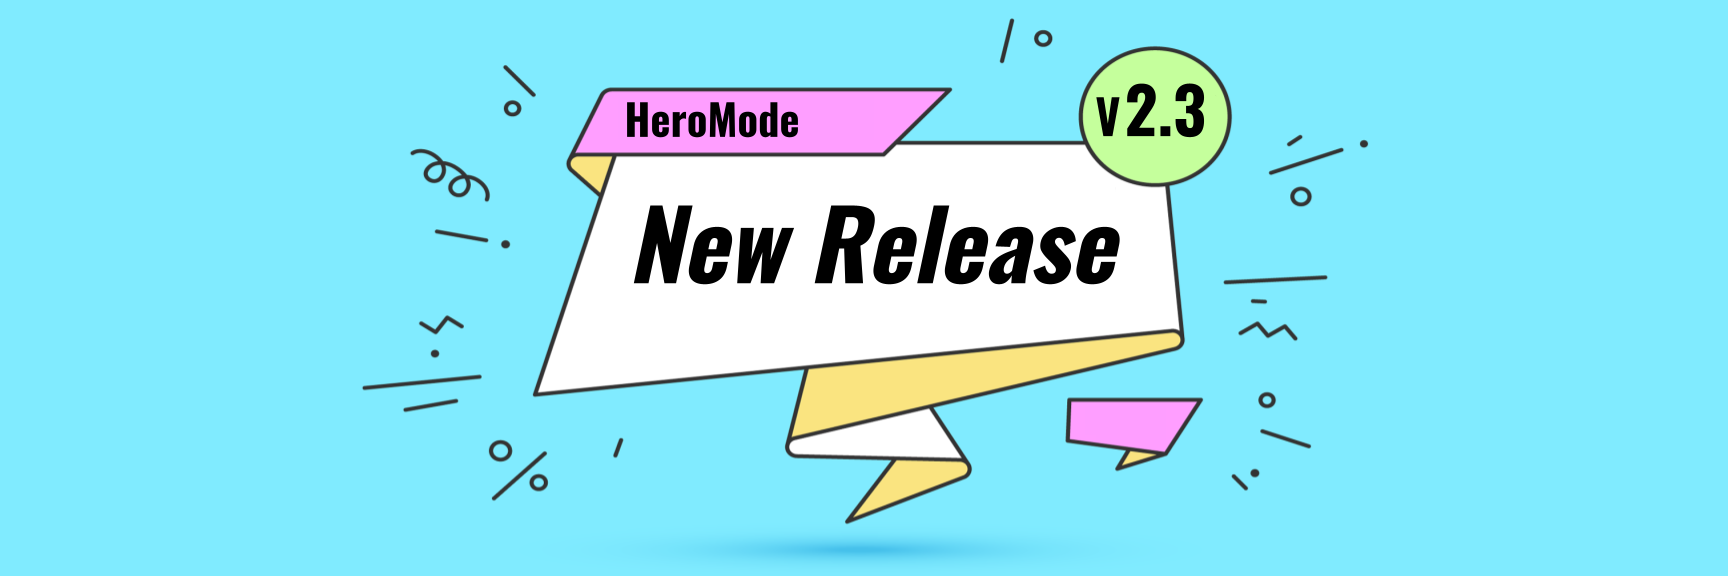 heromode v2.3 ios app has been released in the app store